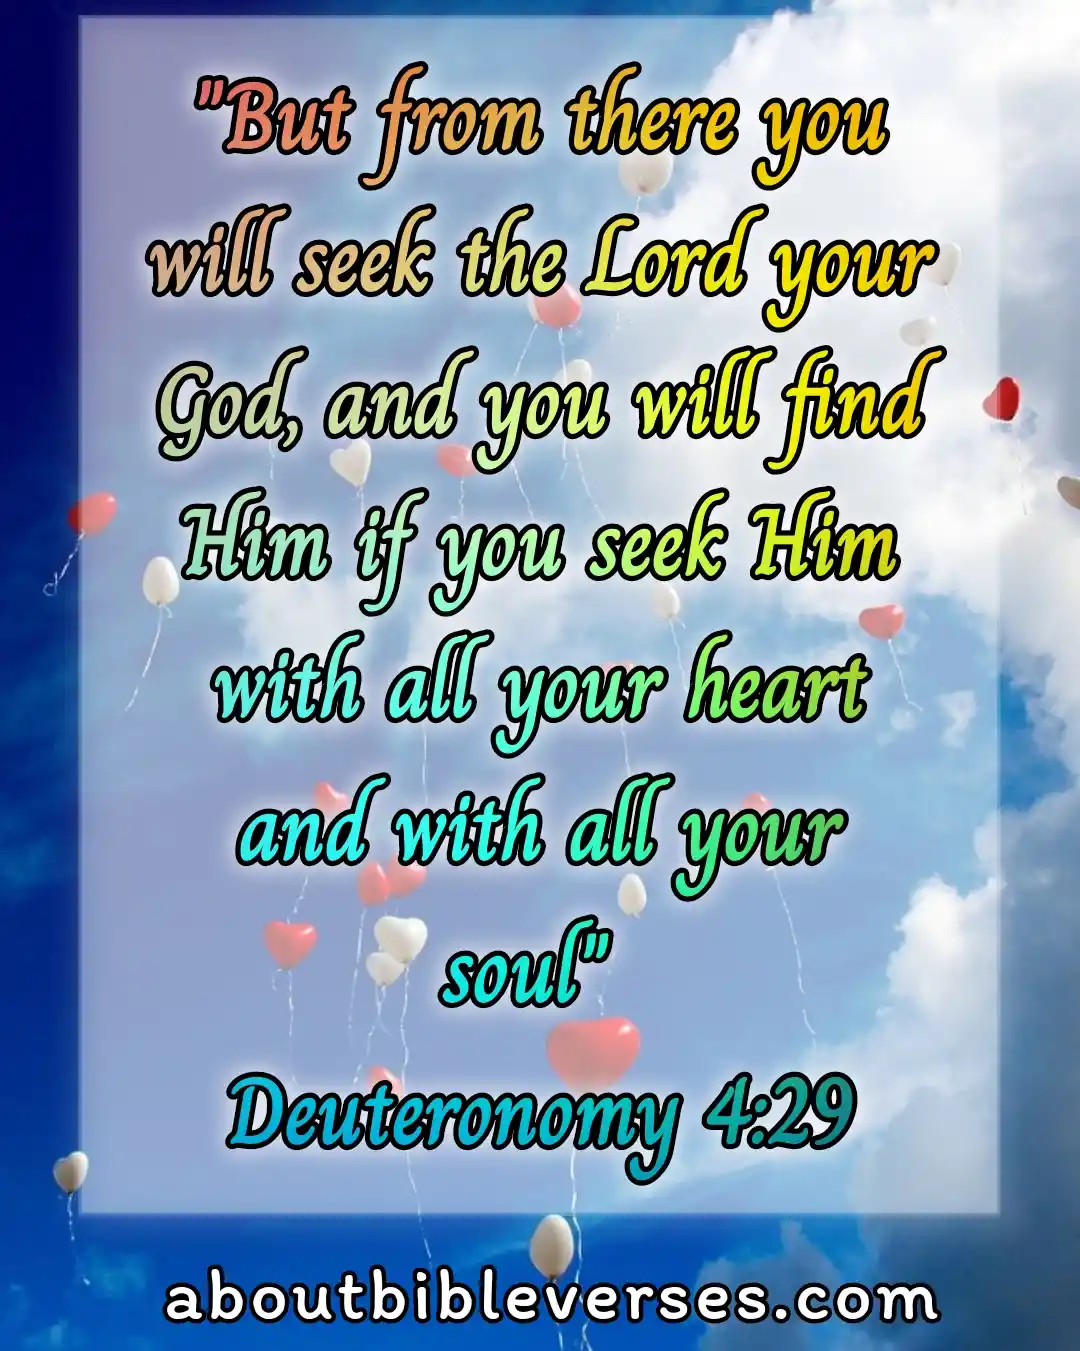 today bible verse (Deuteronomy 4:29)